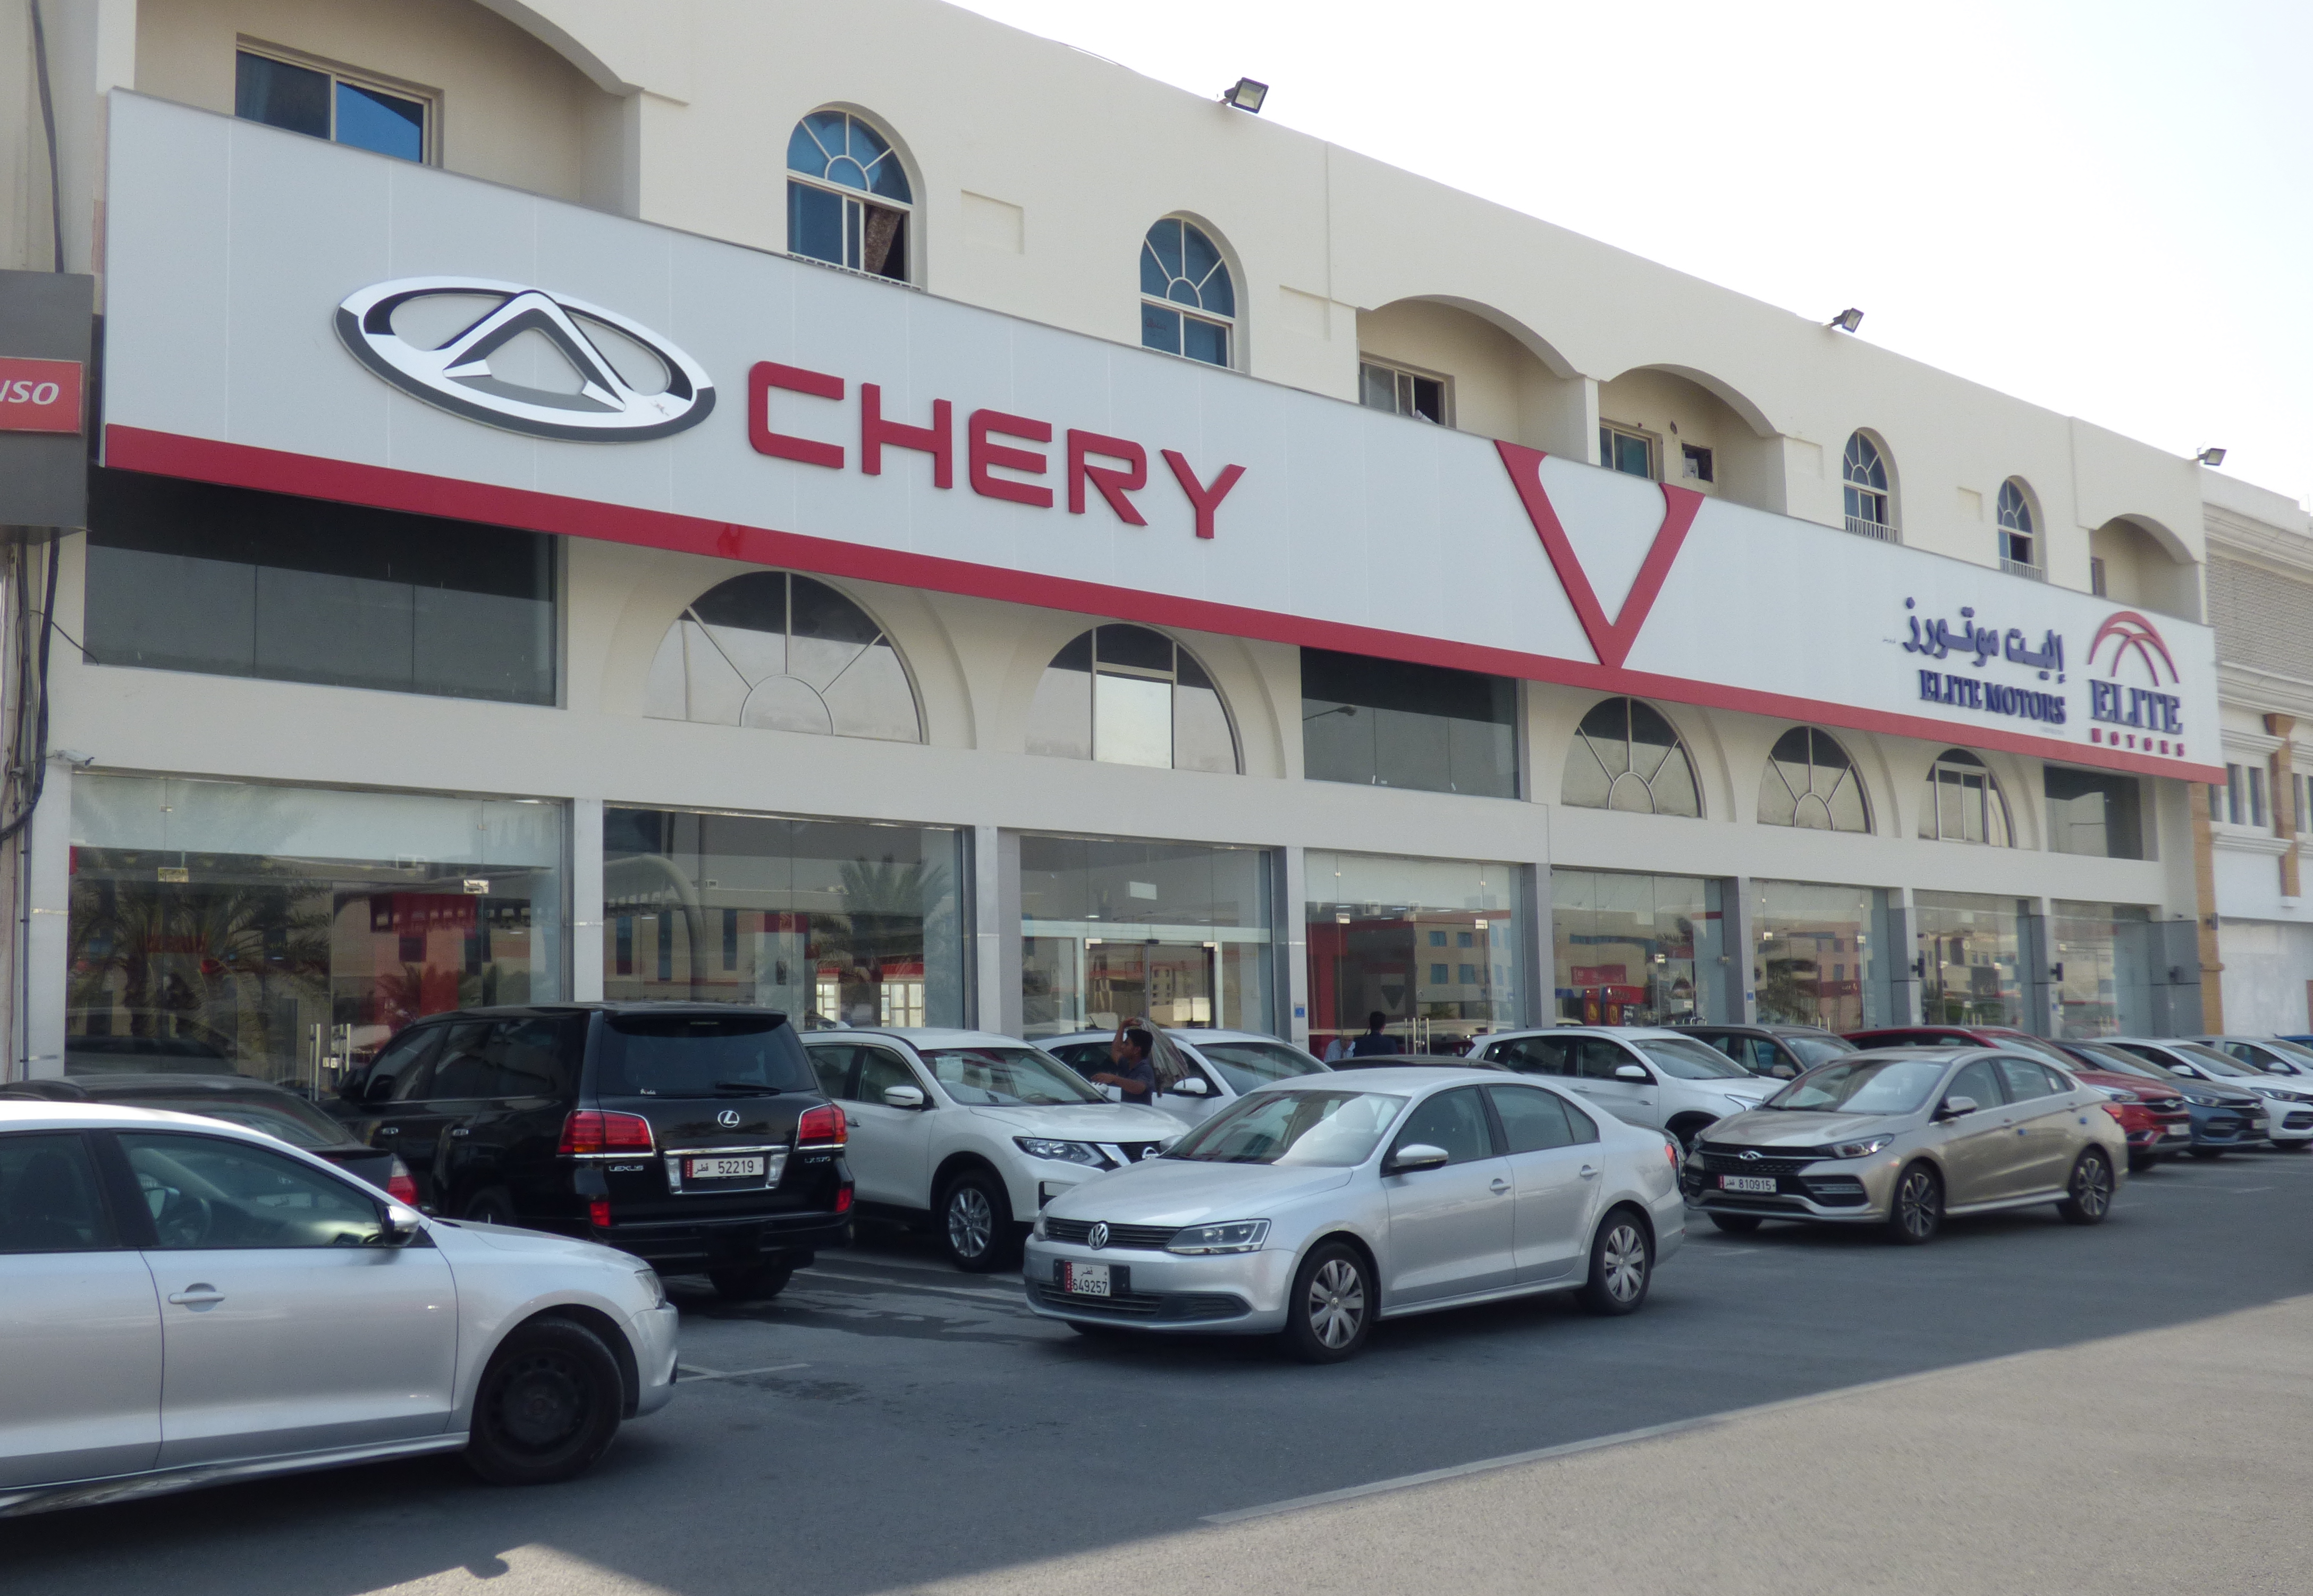 Elite Motors opens a new showroom selling Chery cars